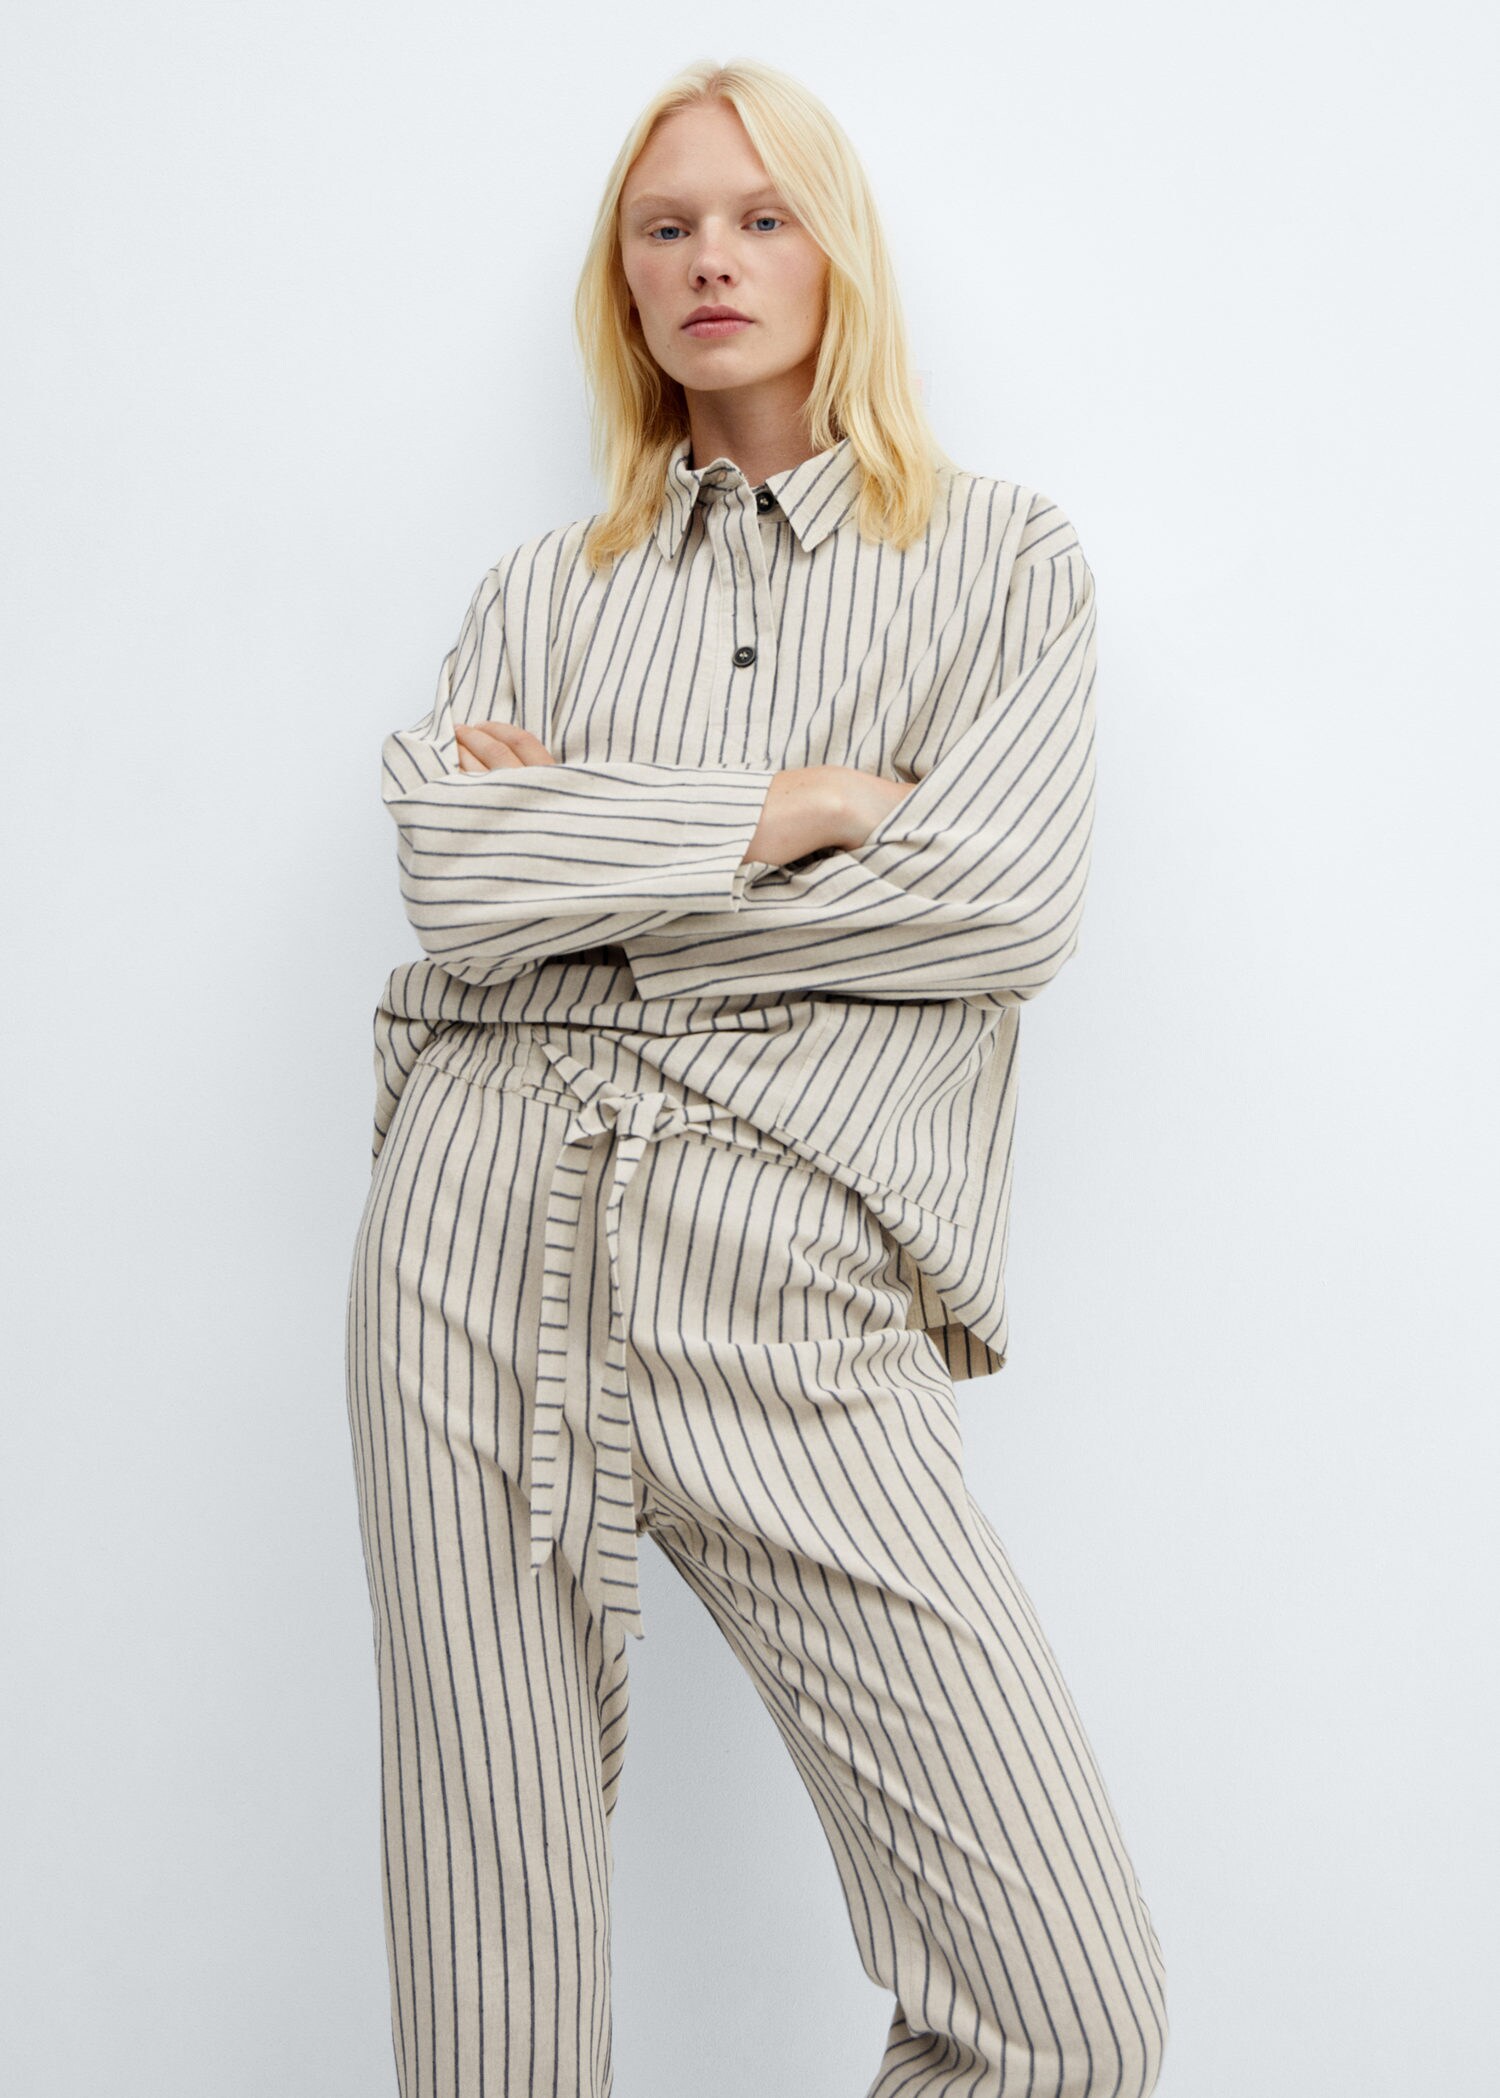 Wide Leg Elastic Waist Striped Pajama Pants